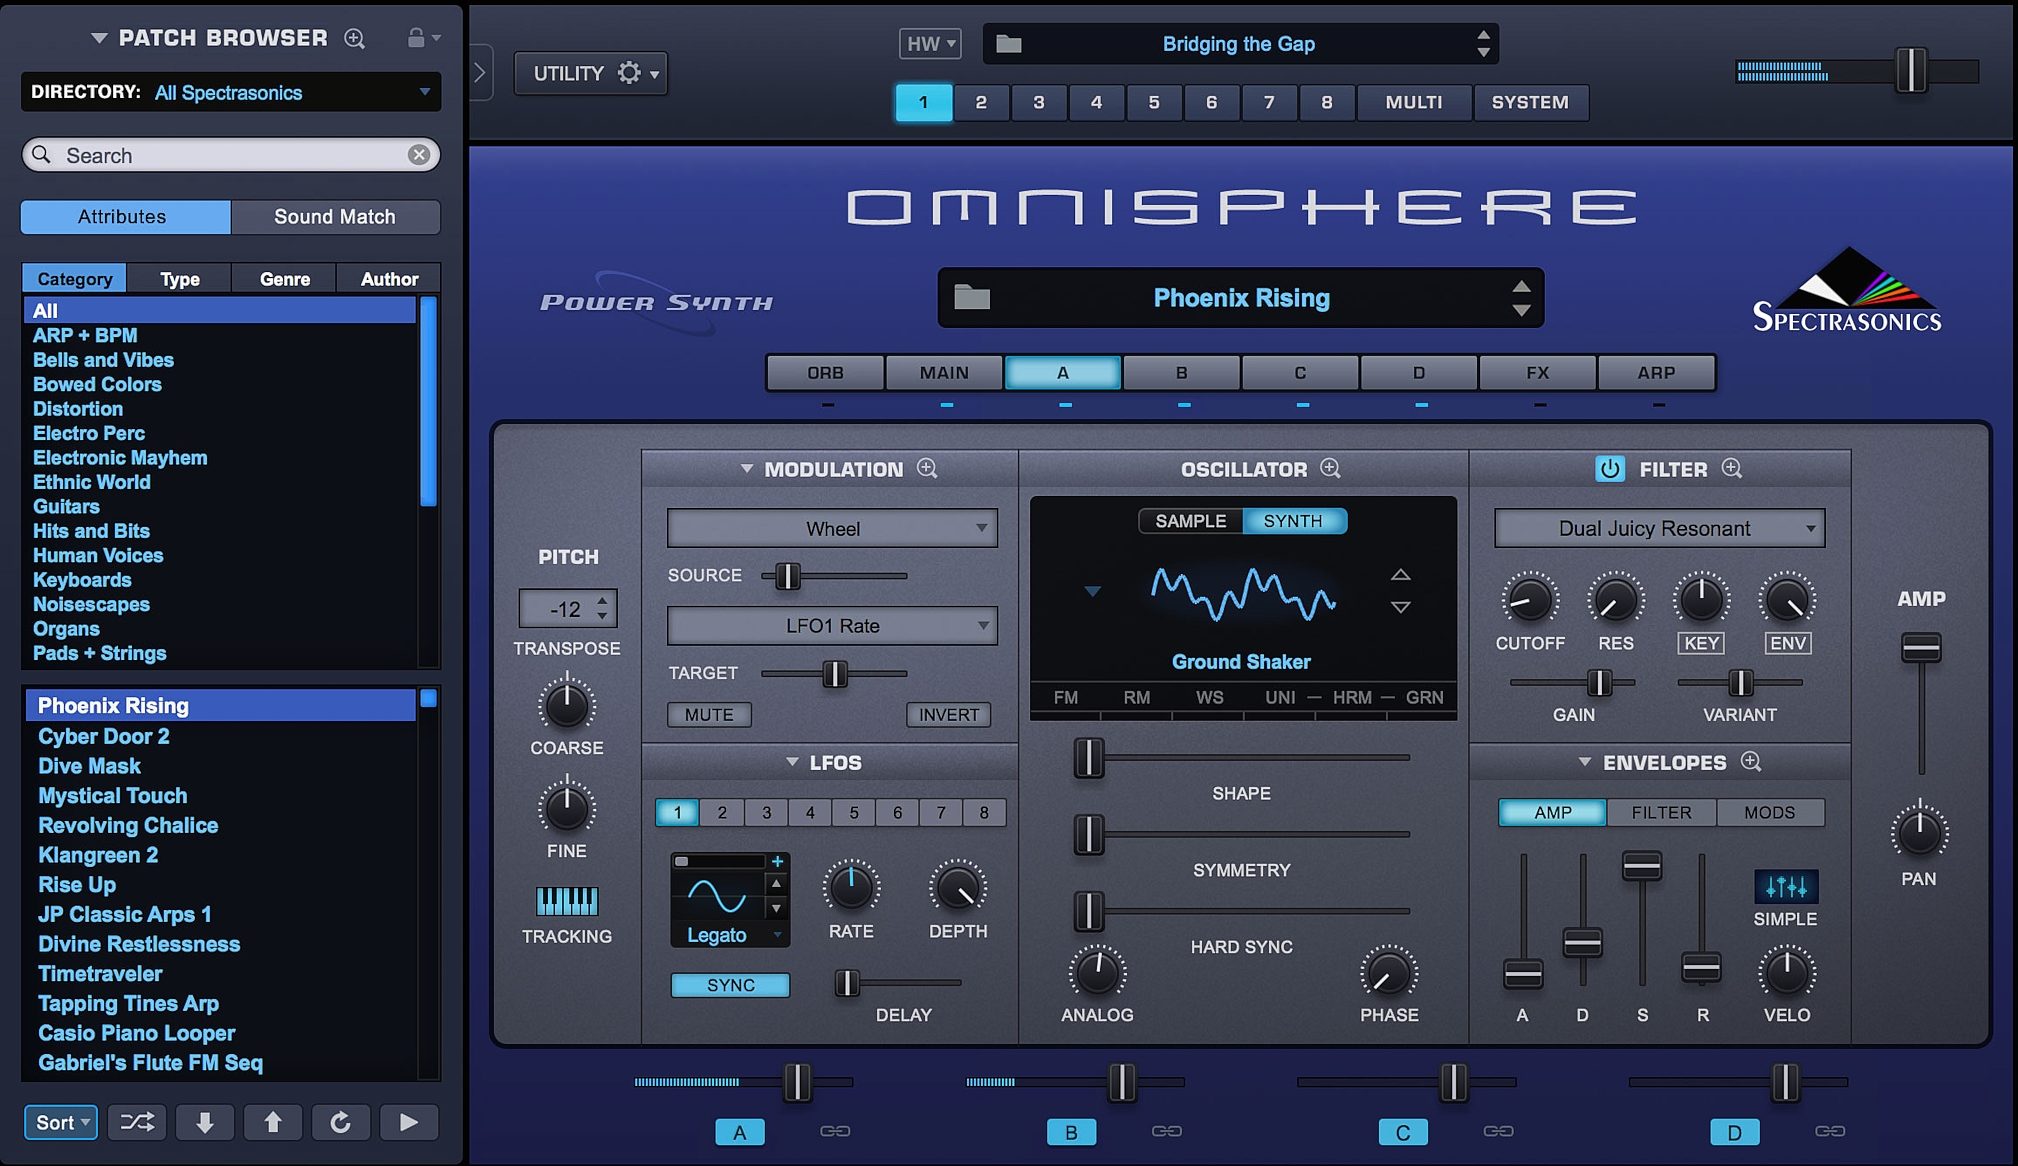 Omnisphere 2.6 free